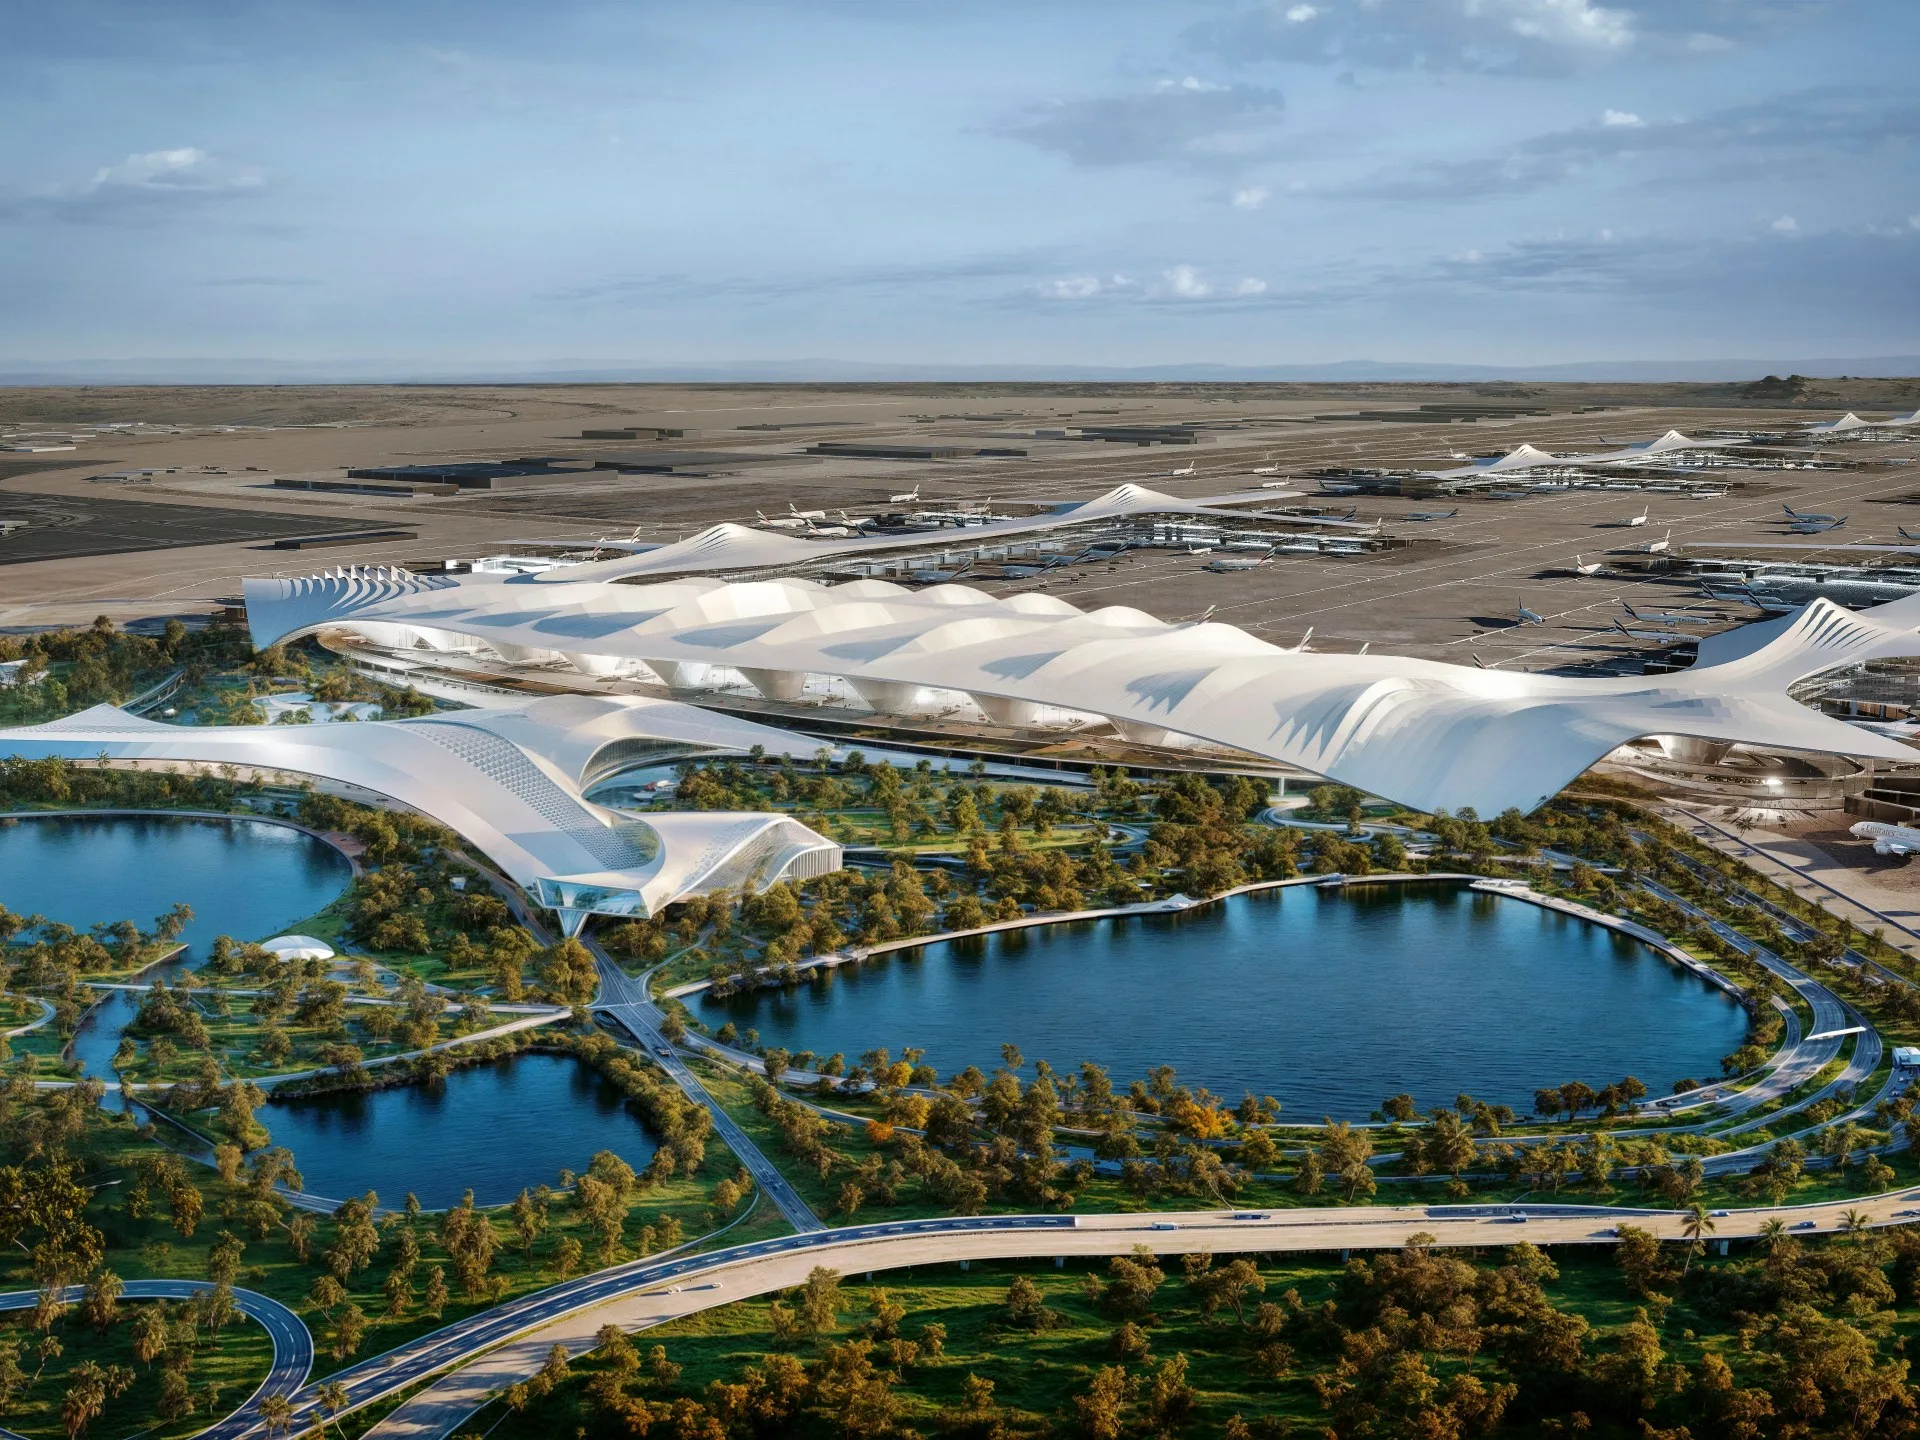 Dubai’s ruler announces construction of world’s largest airport terminal | Aviation News